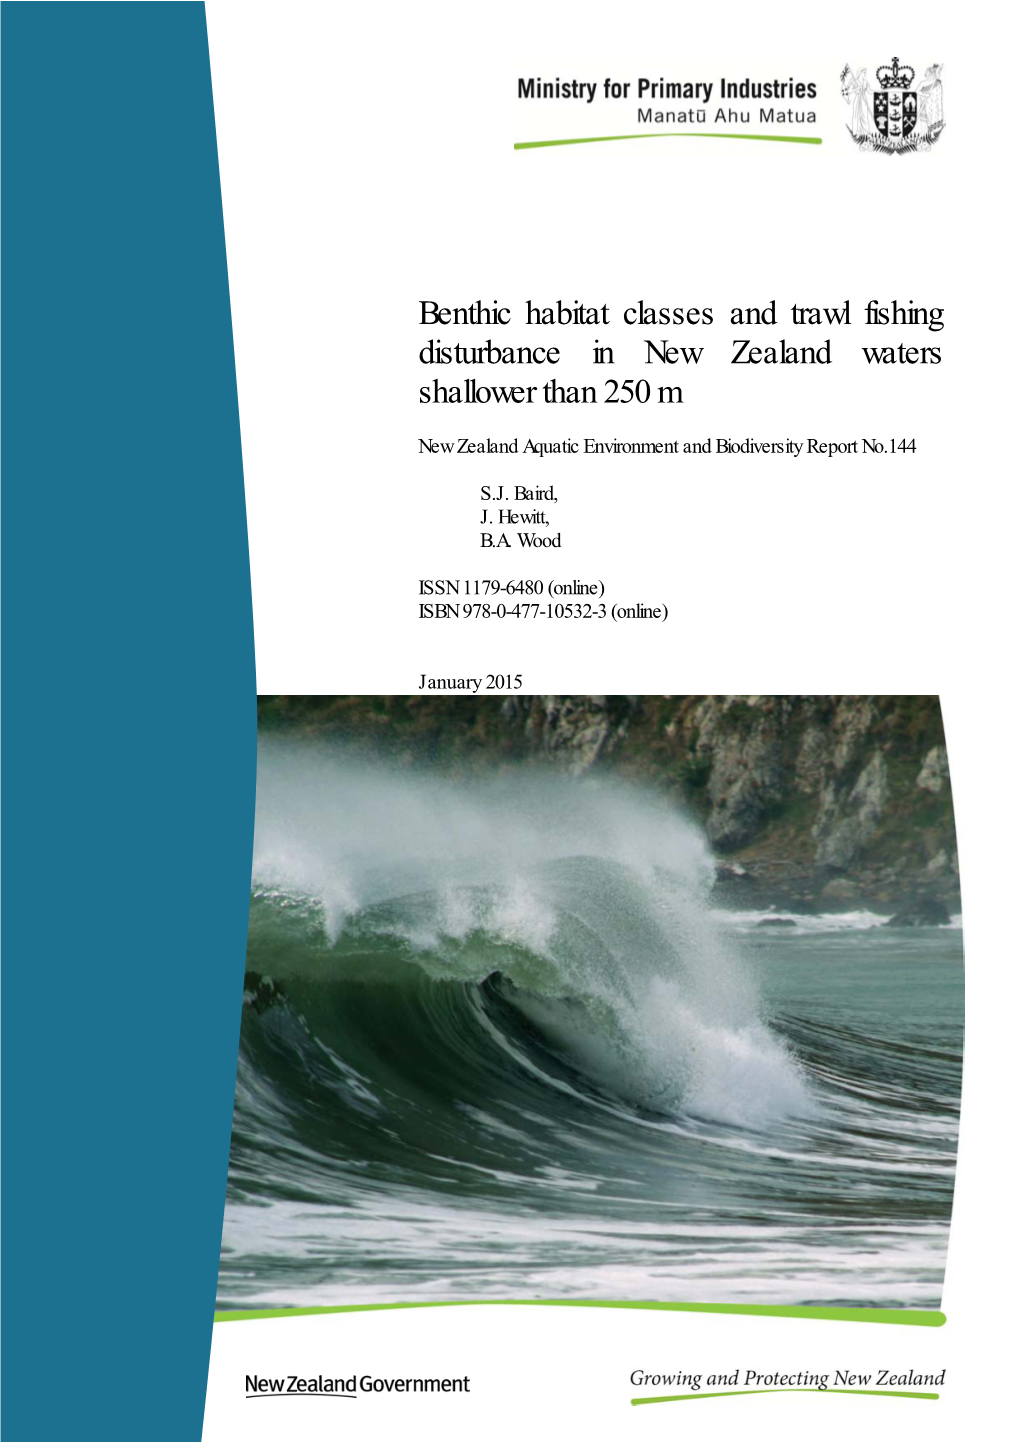 Benthic Habitat Classes and Trawl Fishing Disturbance in New Zealand Waters Shallower Than 250 M